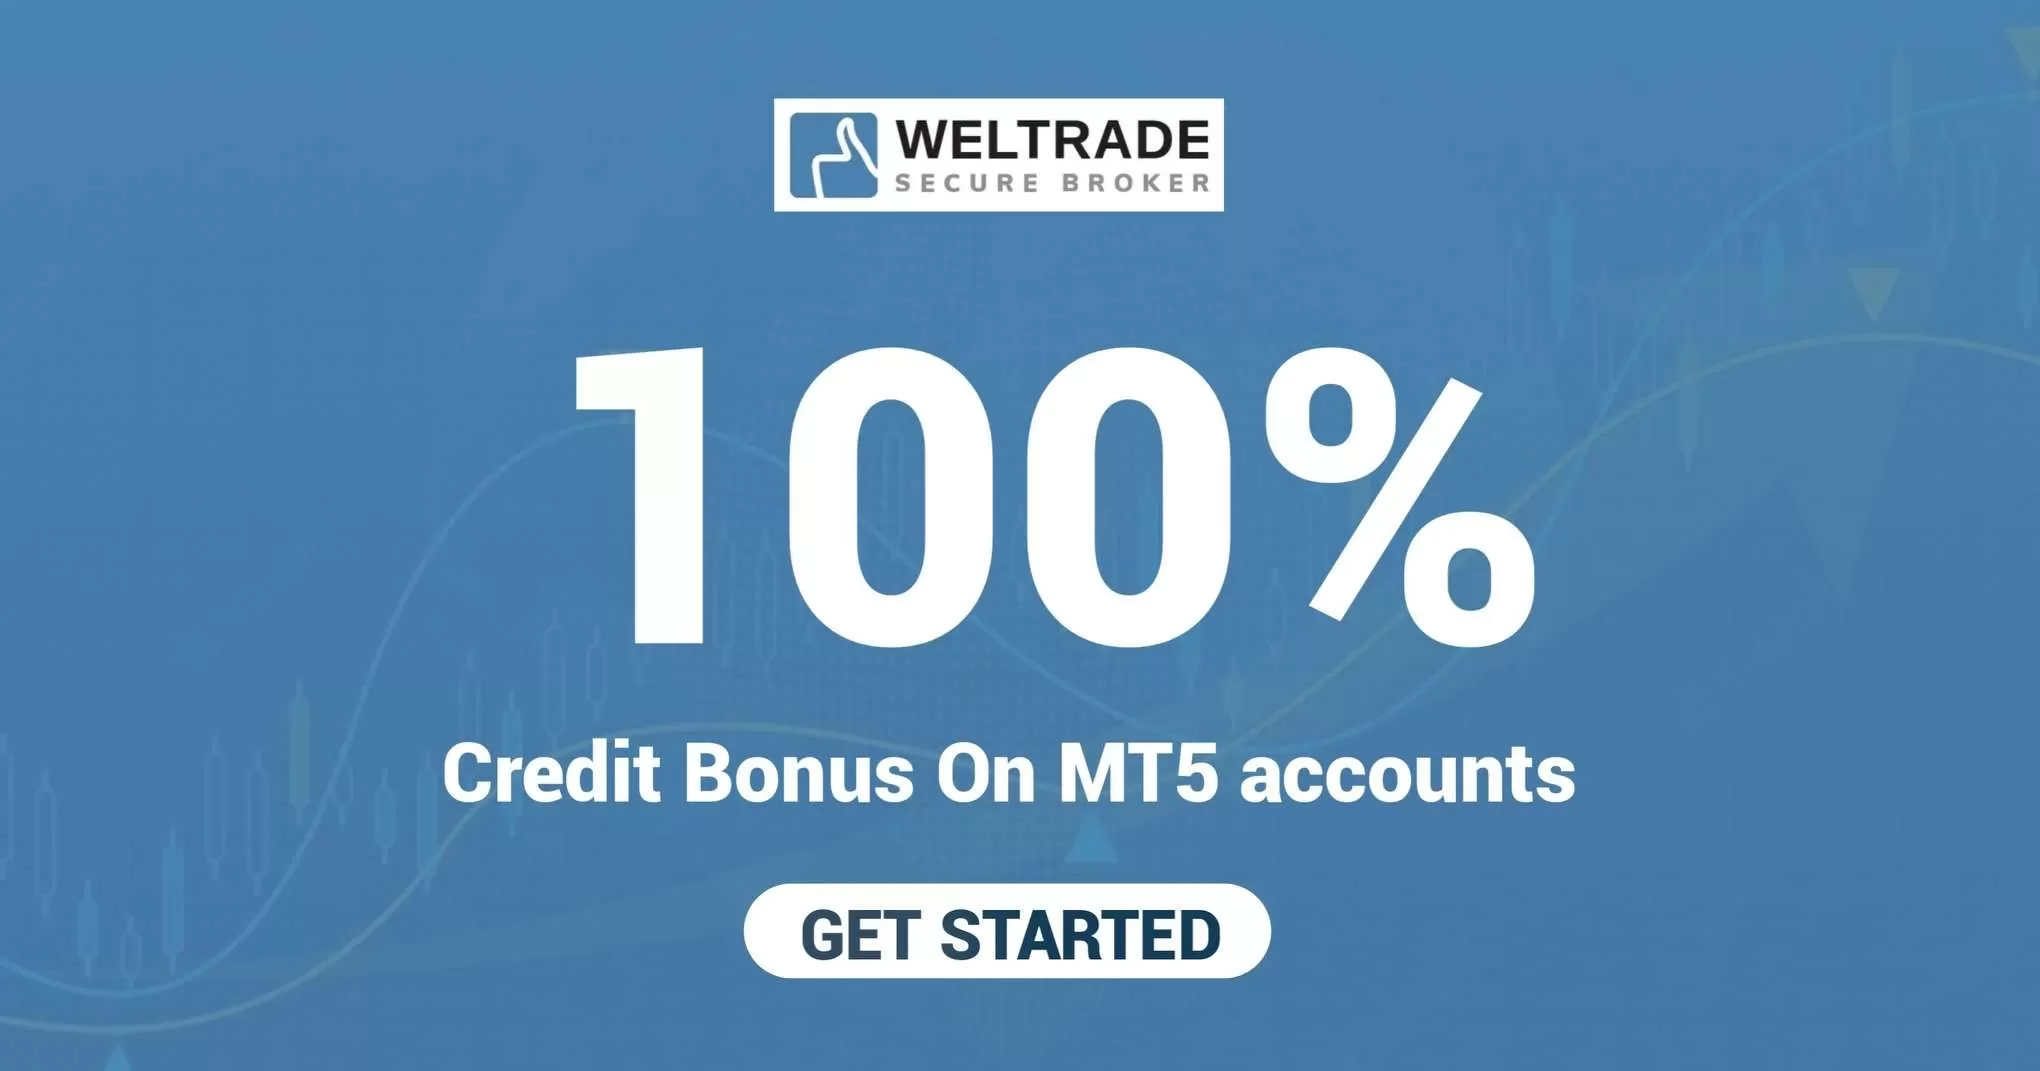 Weltrade Forex 100% Credit Bonus On MT5 Accouns